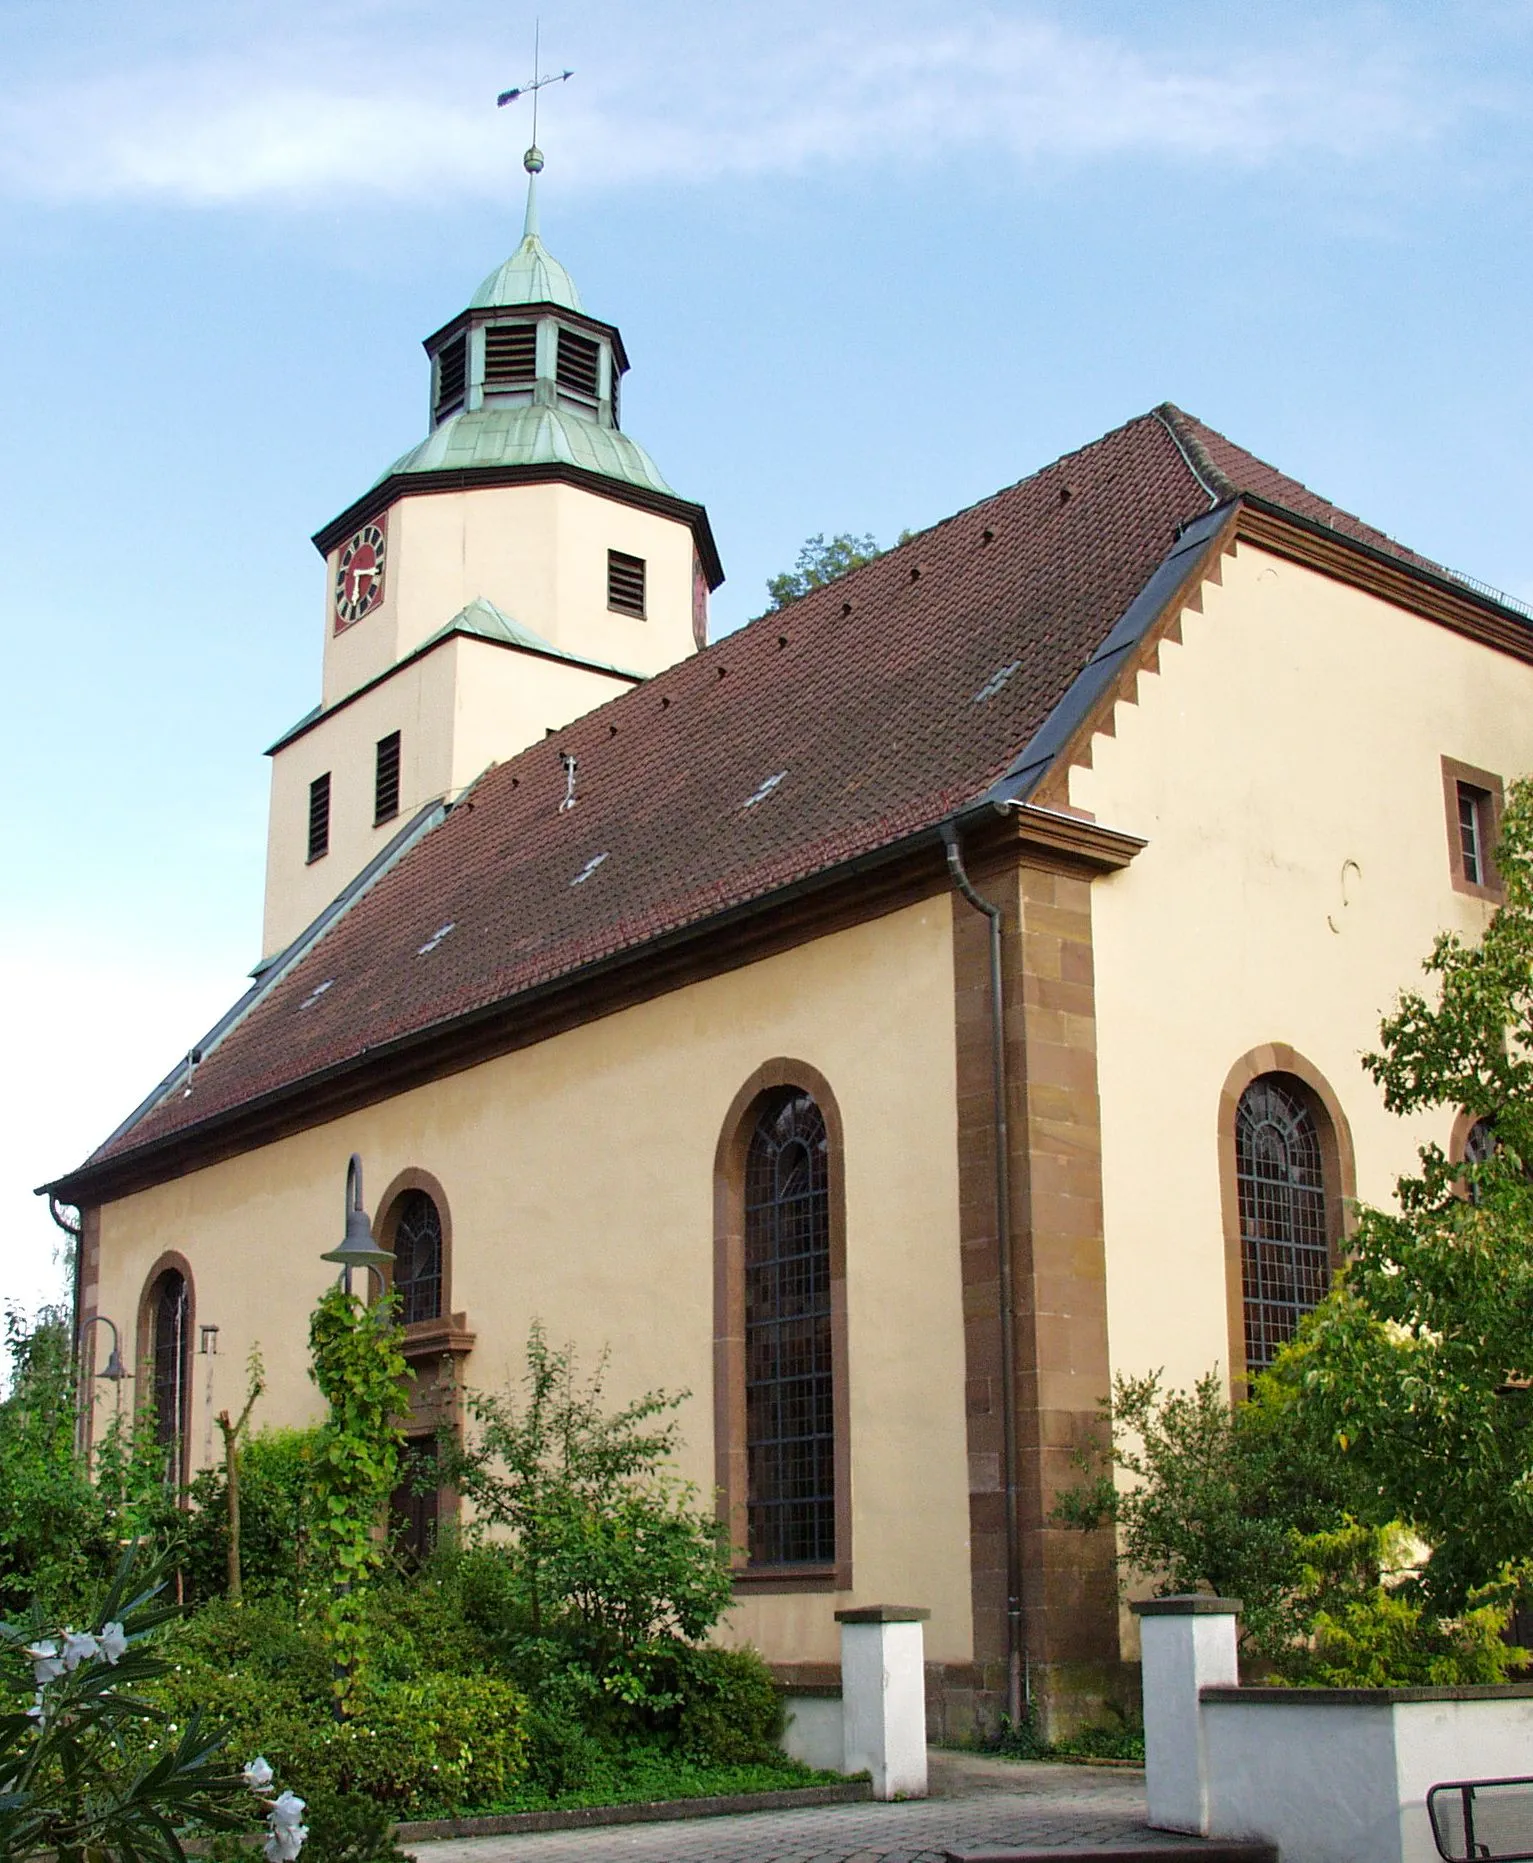 Image of Plüderhausen